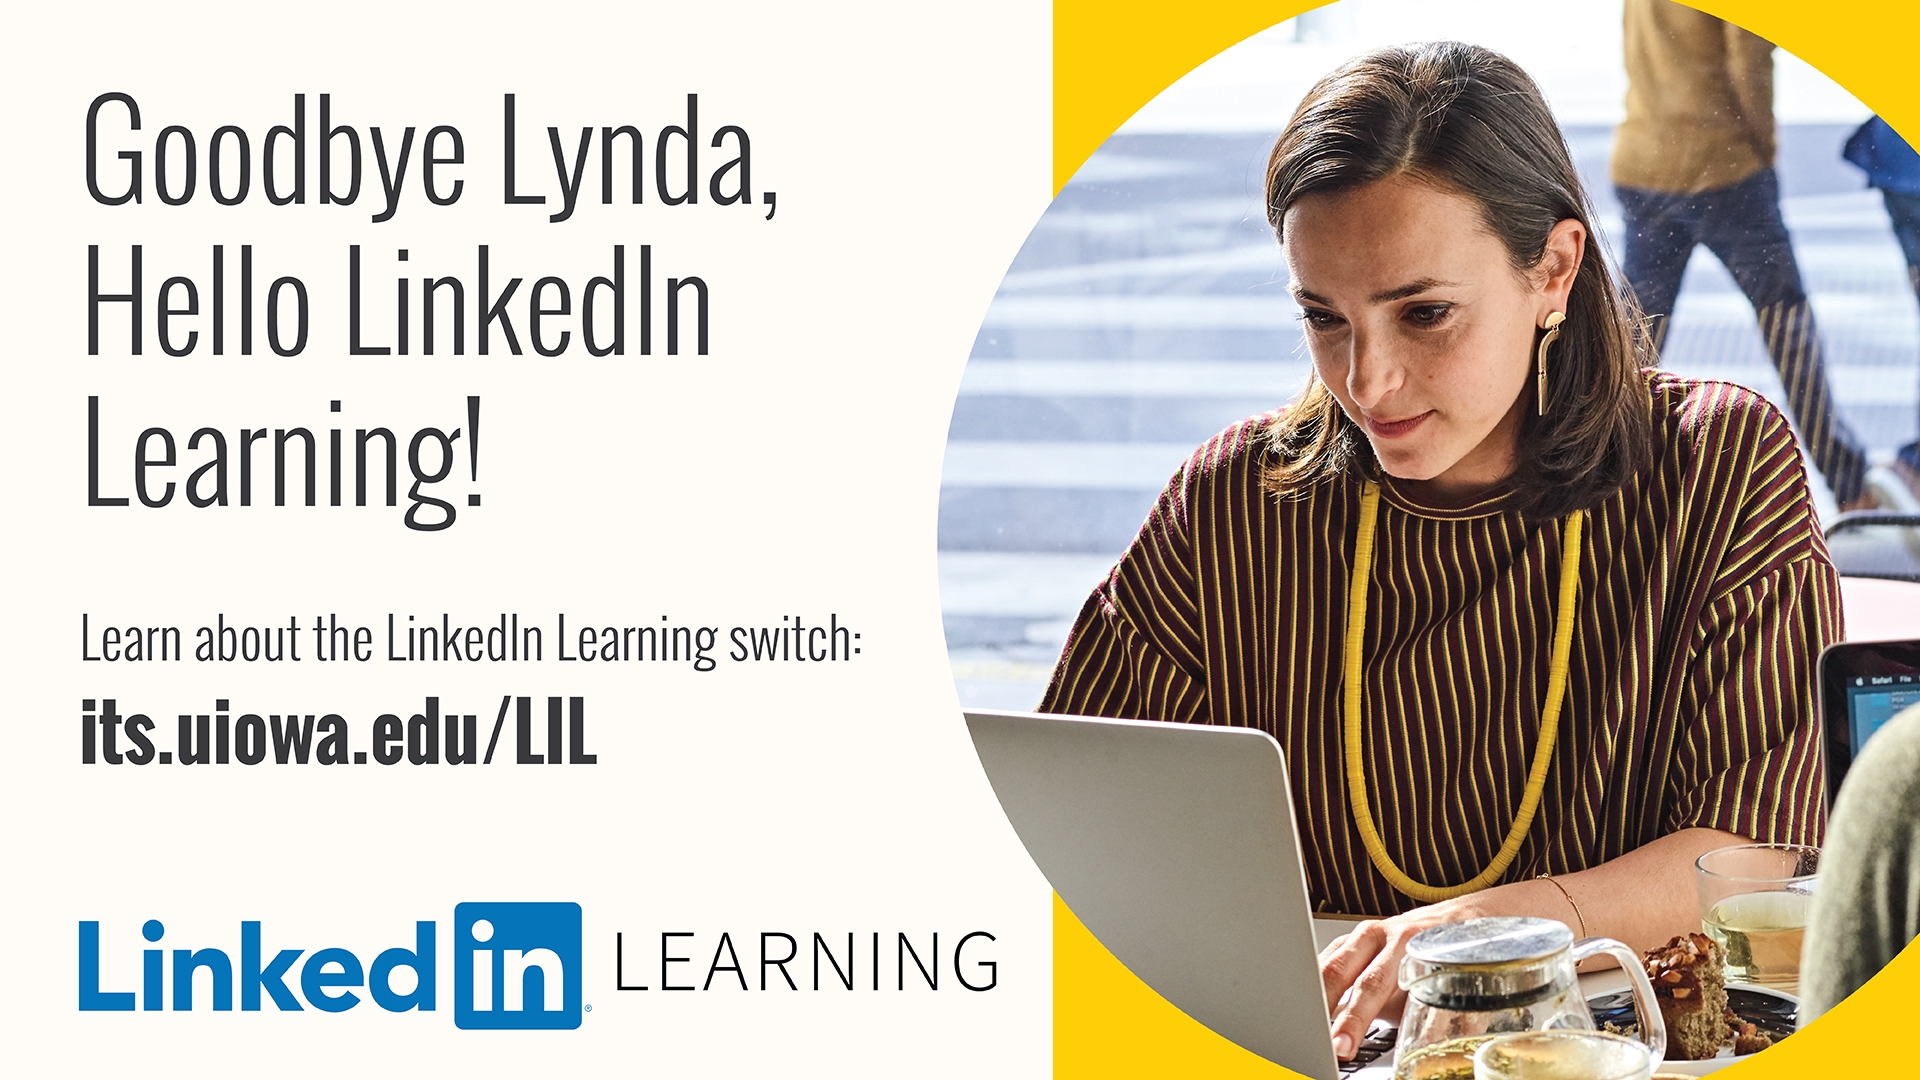 Goodbye Lynda, Hello LinkedIn Learning. its.uiowa.edu/LIL